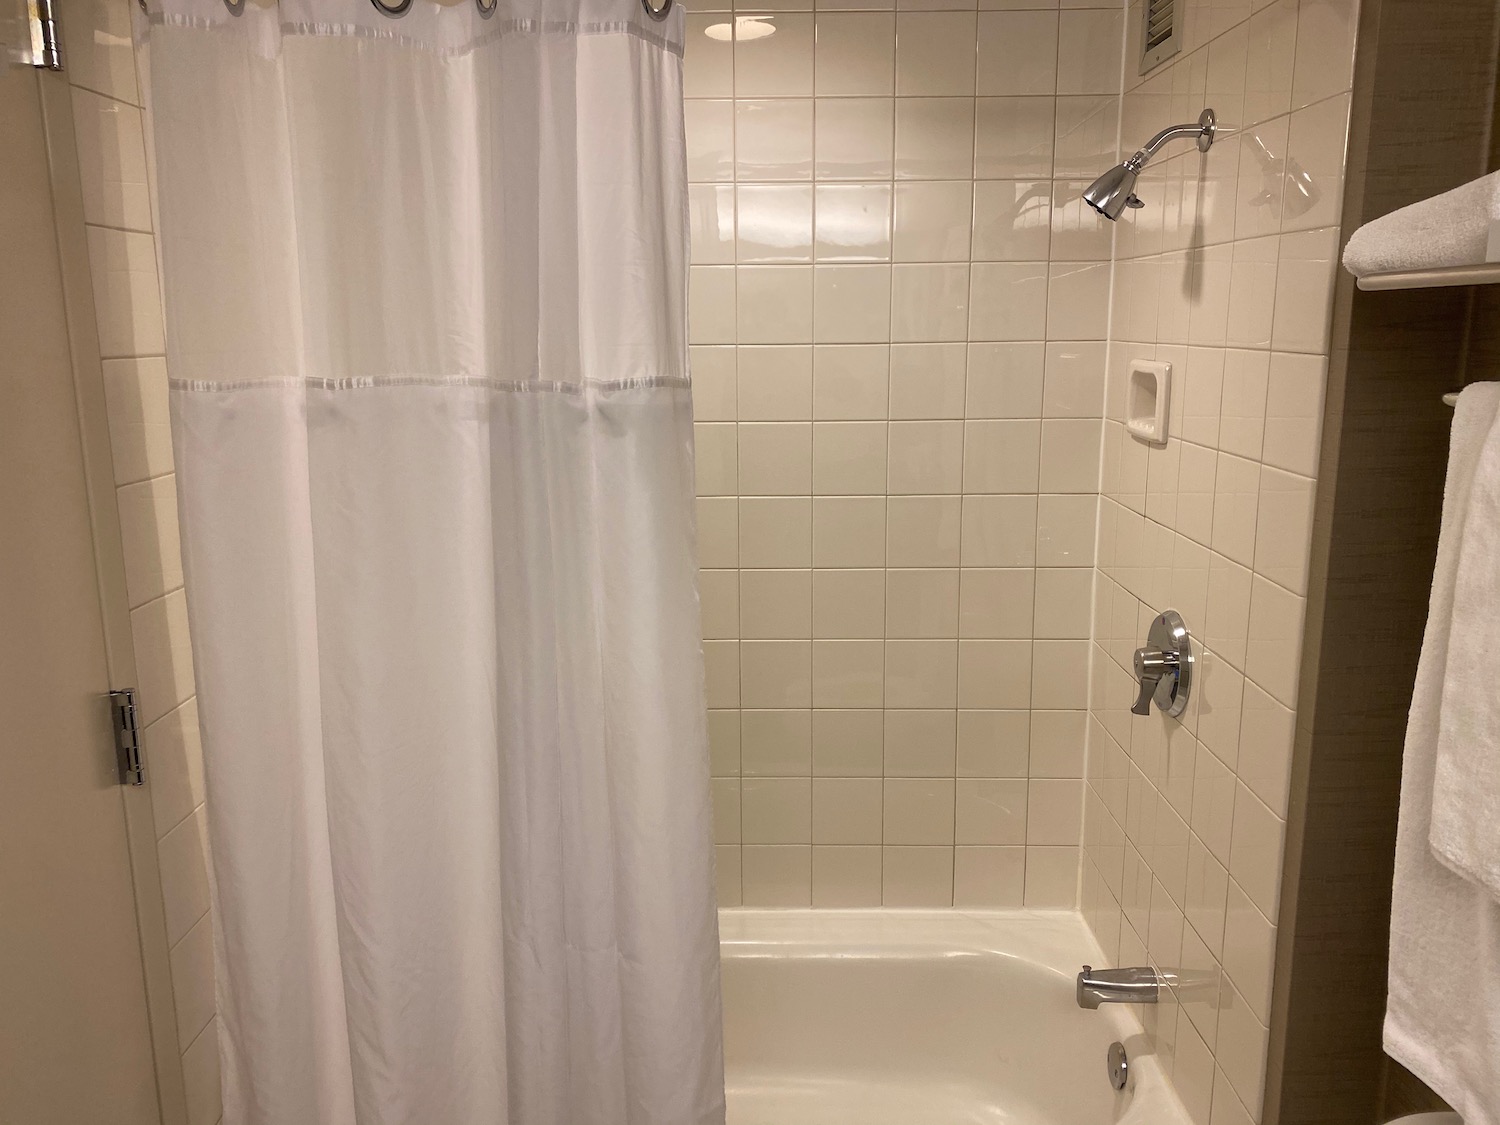 a shower curtain and bathtub